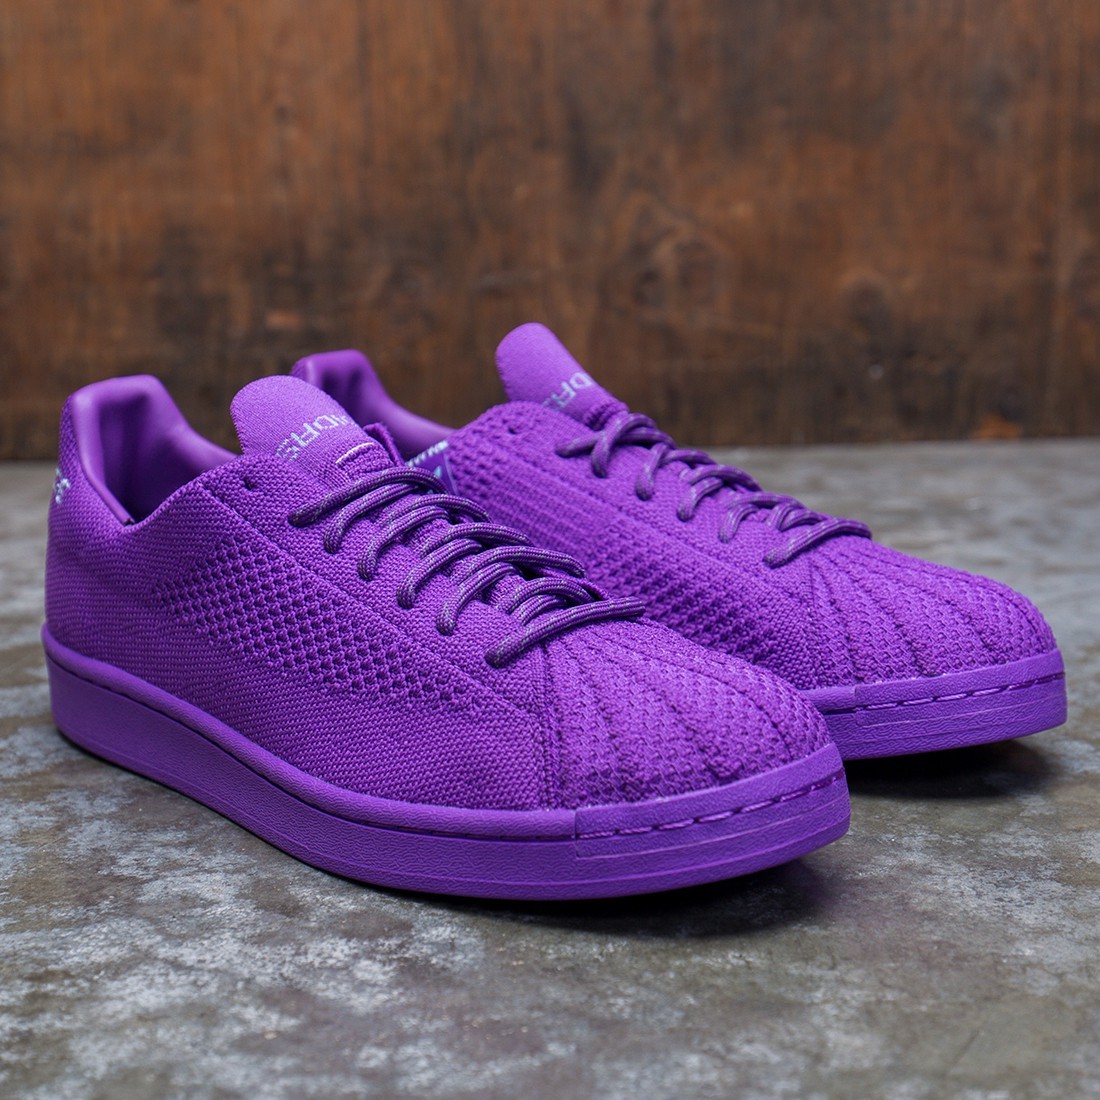 adidas originals superstar primeknit men purple